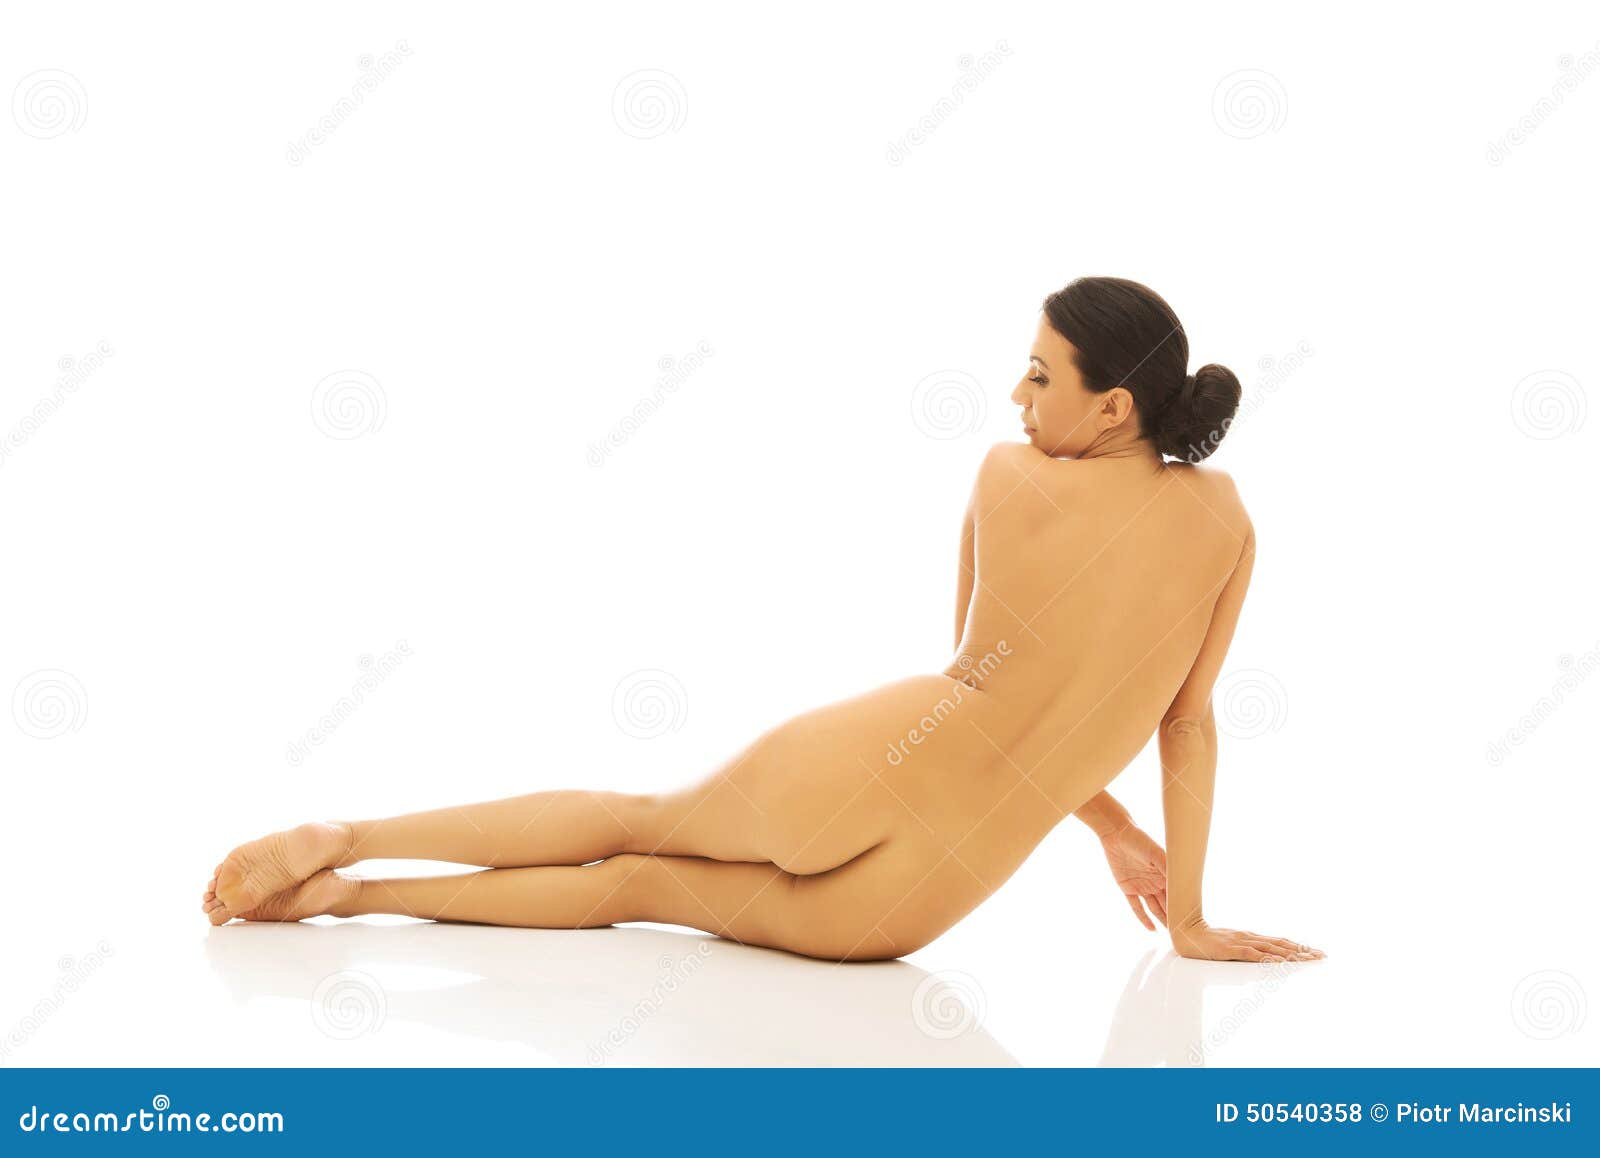 cindi swisher reccomend Nude Woman Laying On Back